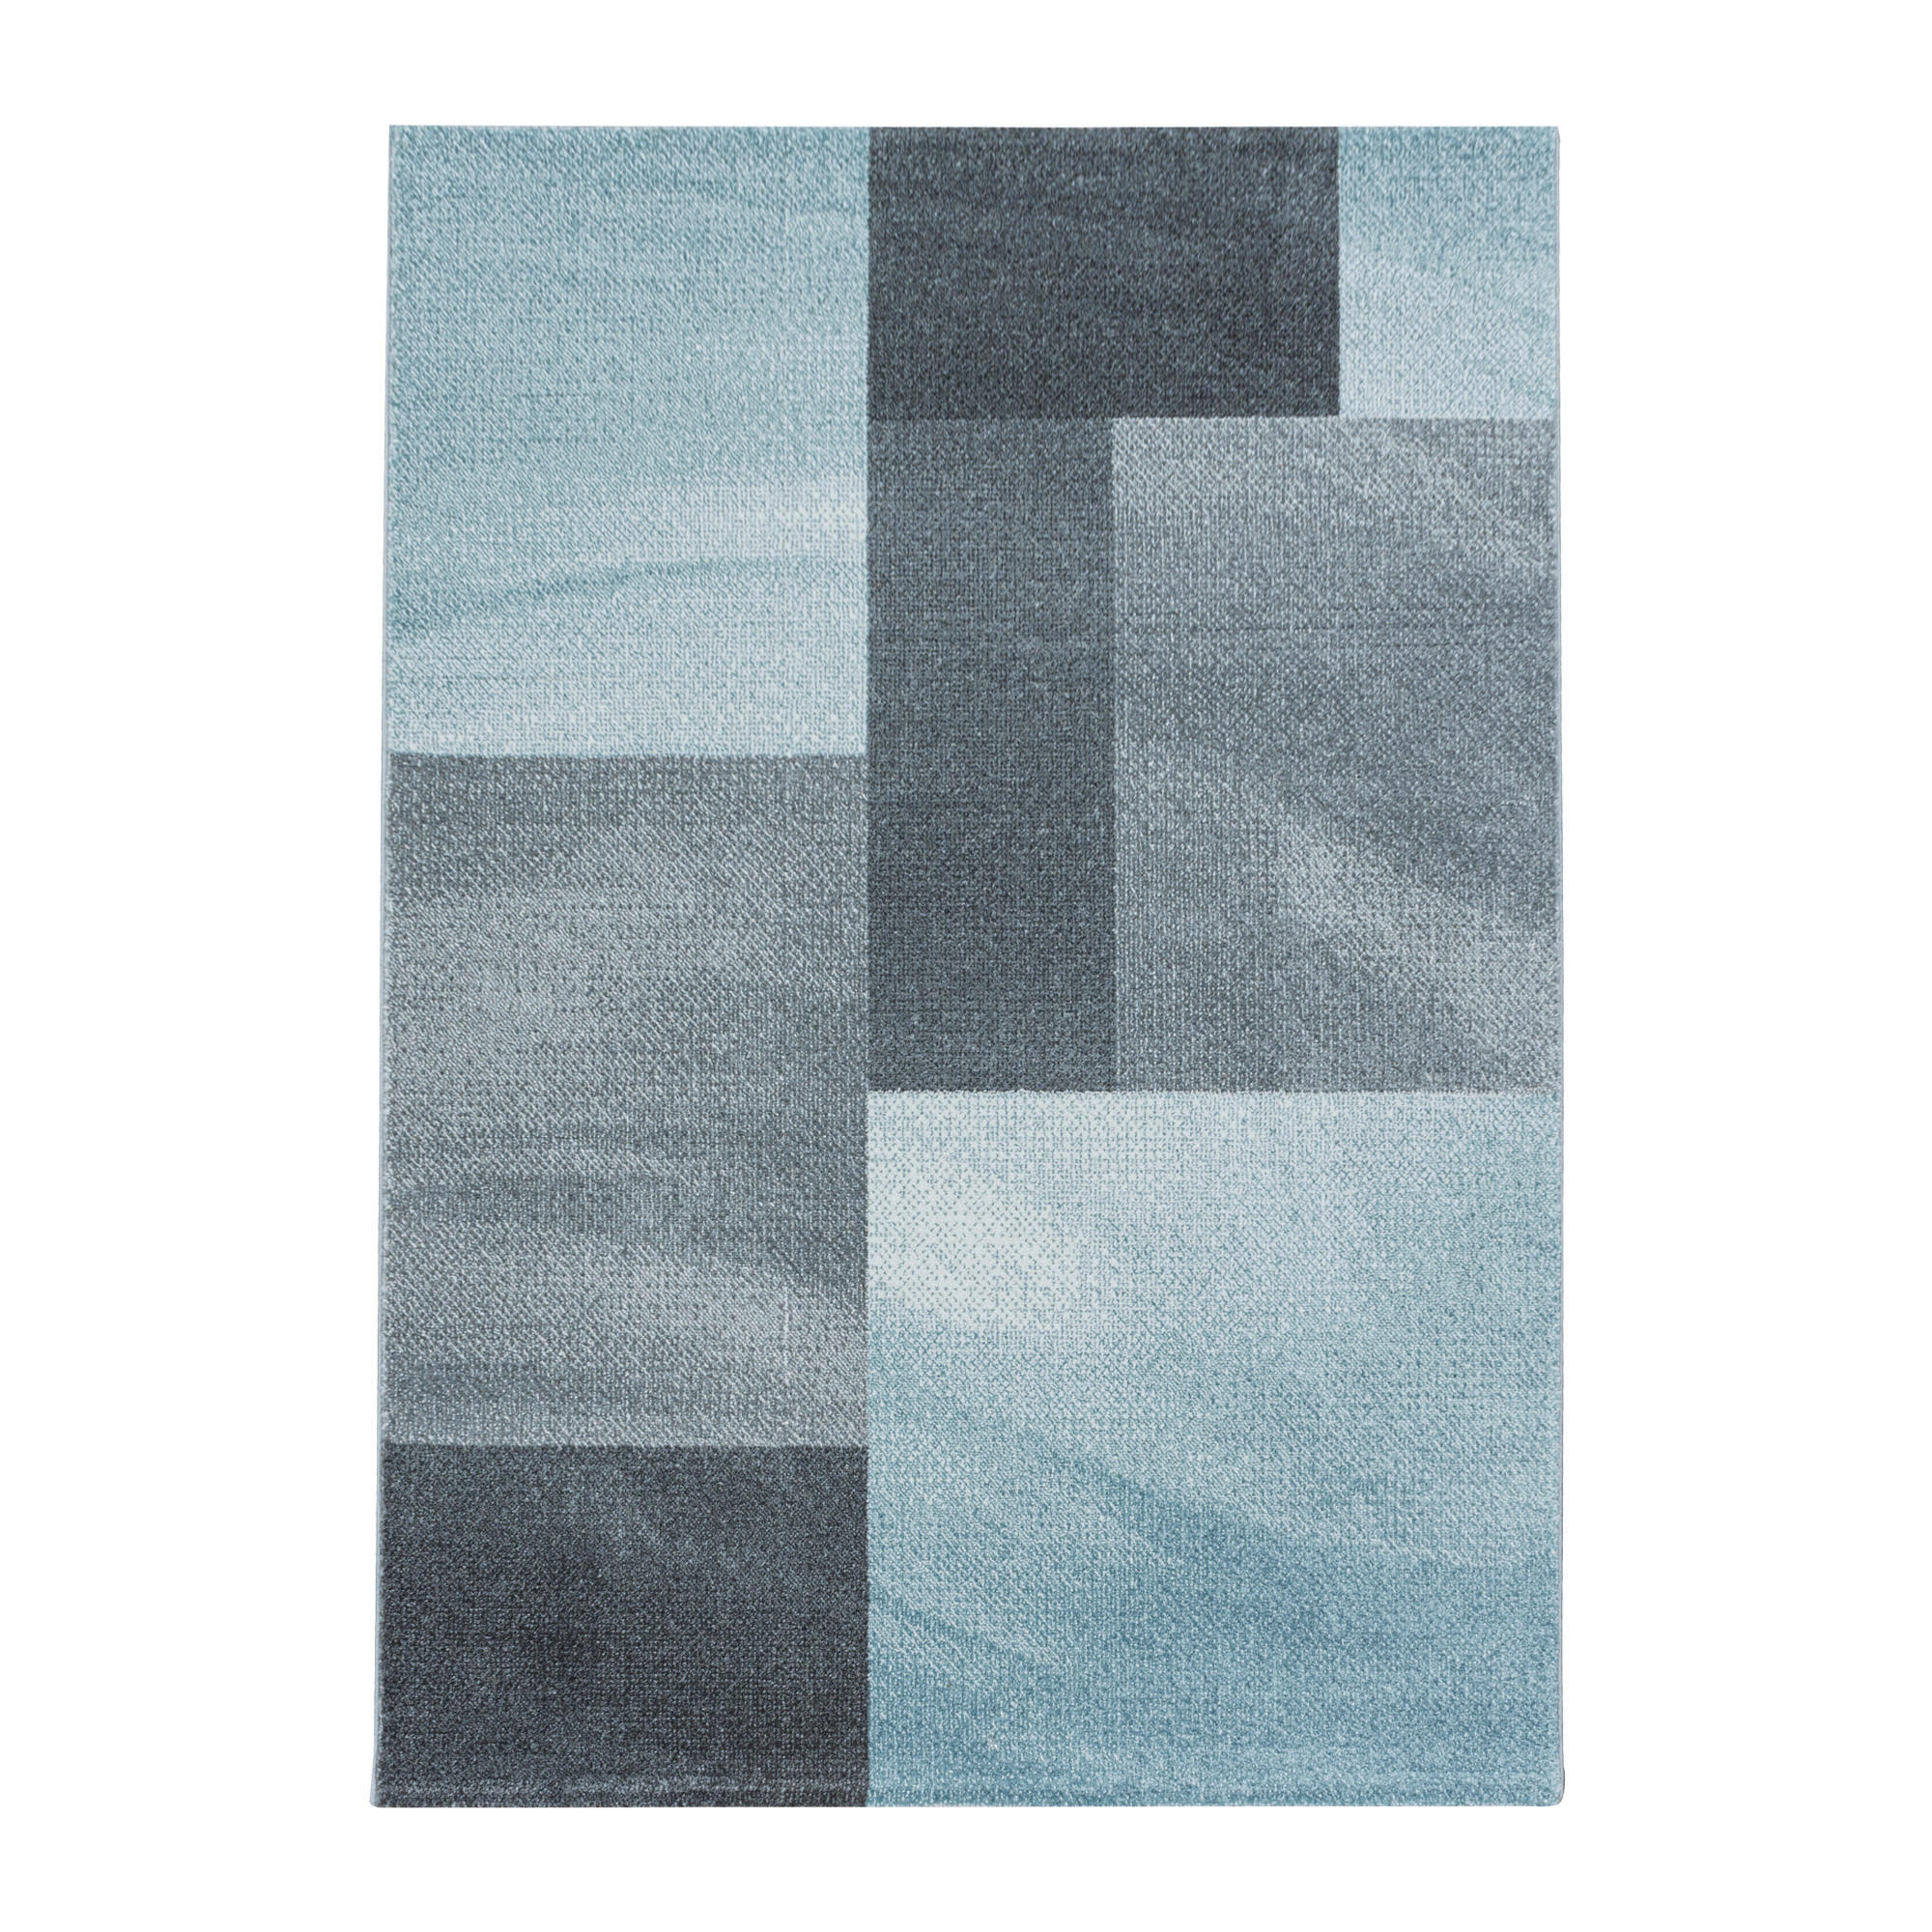 WEBTEPPICH  80/150 cm  Blau   - Blau, Basics, Textil (80/150cm) - Novel